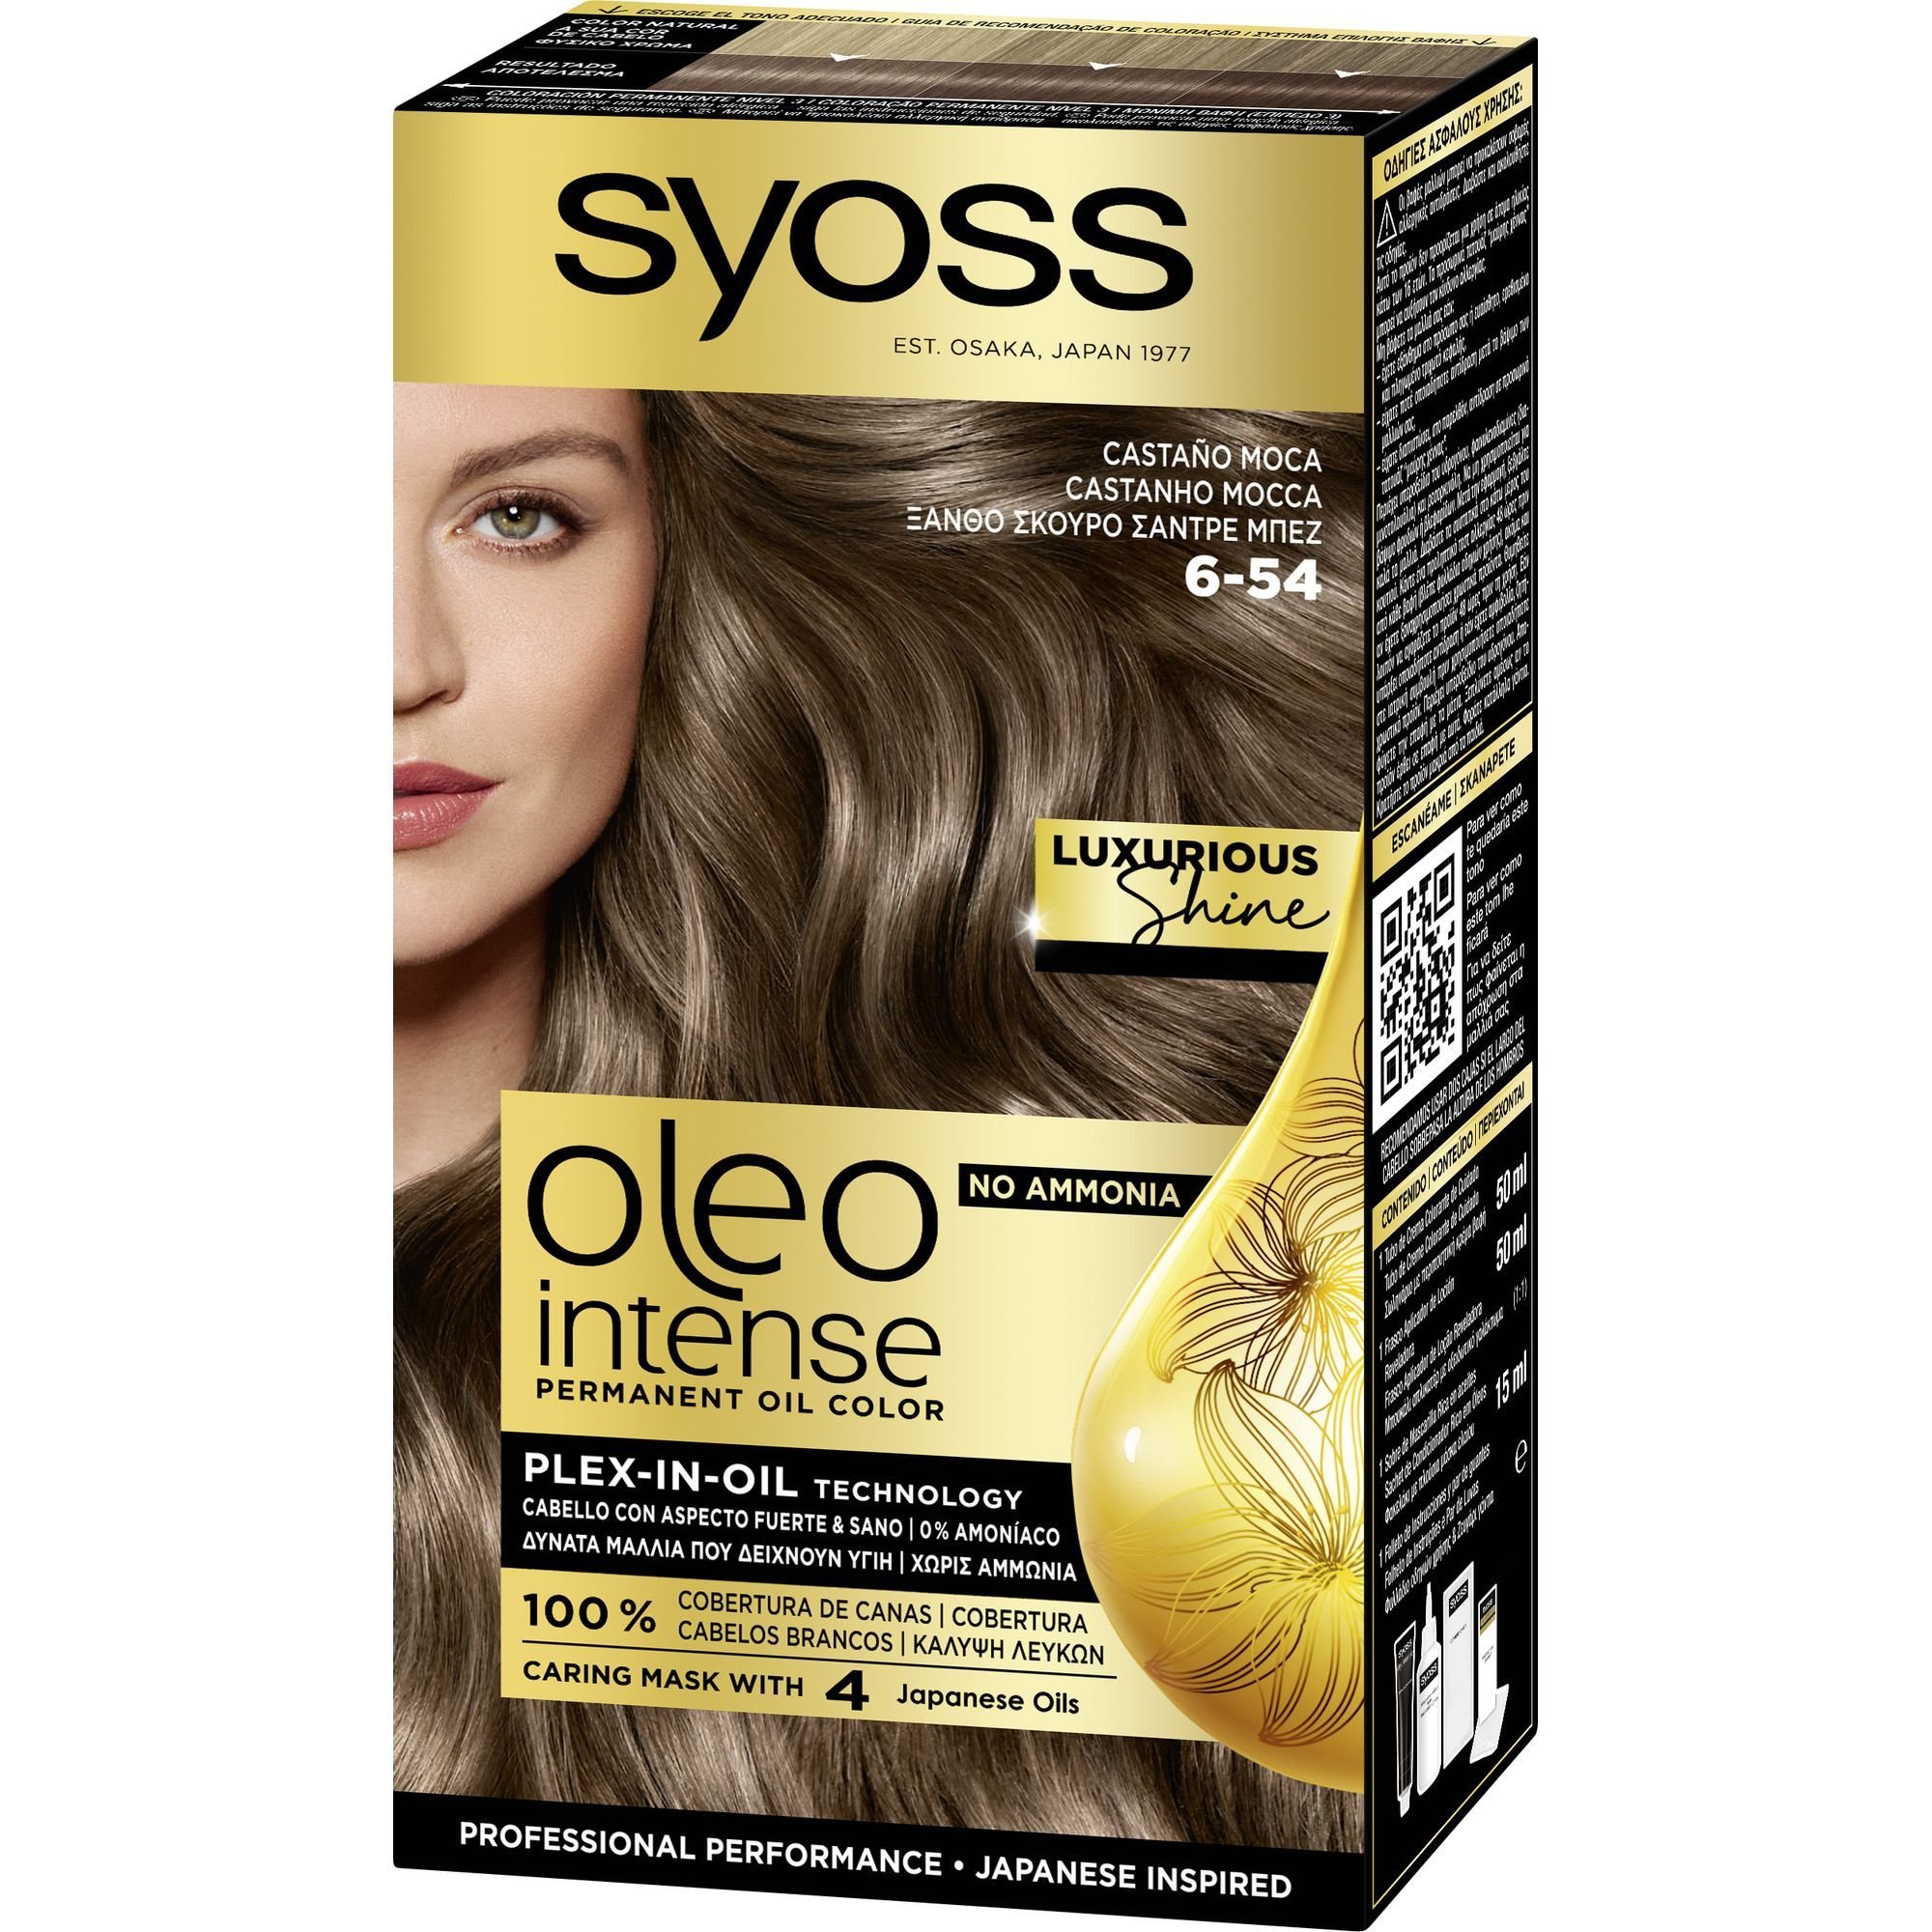 Syoss Syoss Oleo Intense Permanent Oil Hair Color Kit Επαγγελματική Μόνιμη Βαφή Μαλλιών για Εξαιρετική Κάλυψη & Έντονο Χρώμα που Διαρκεί, Χωρίς Αμμωνία 1 Τεμάχιο - 6-54 Ξανθό Σκούρο Σαντρέ Μπεζ